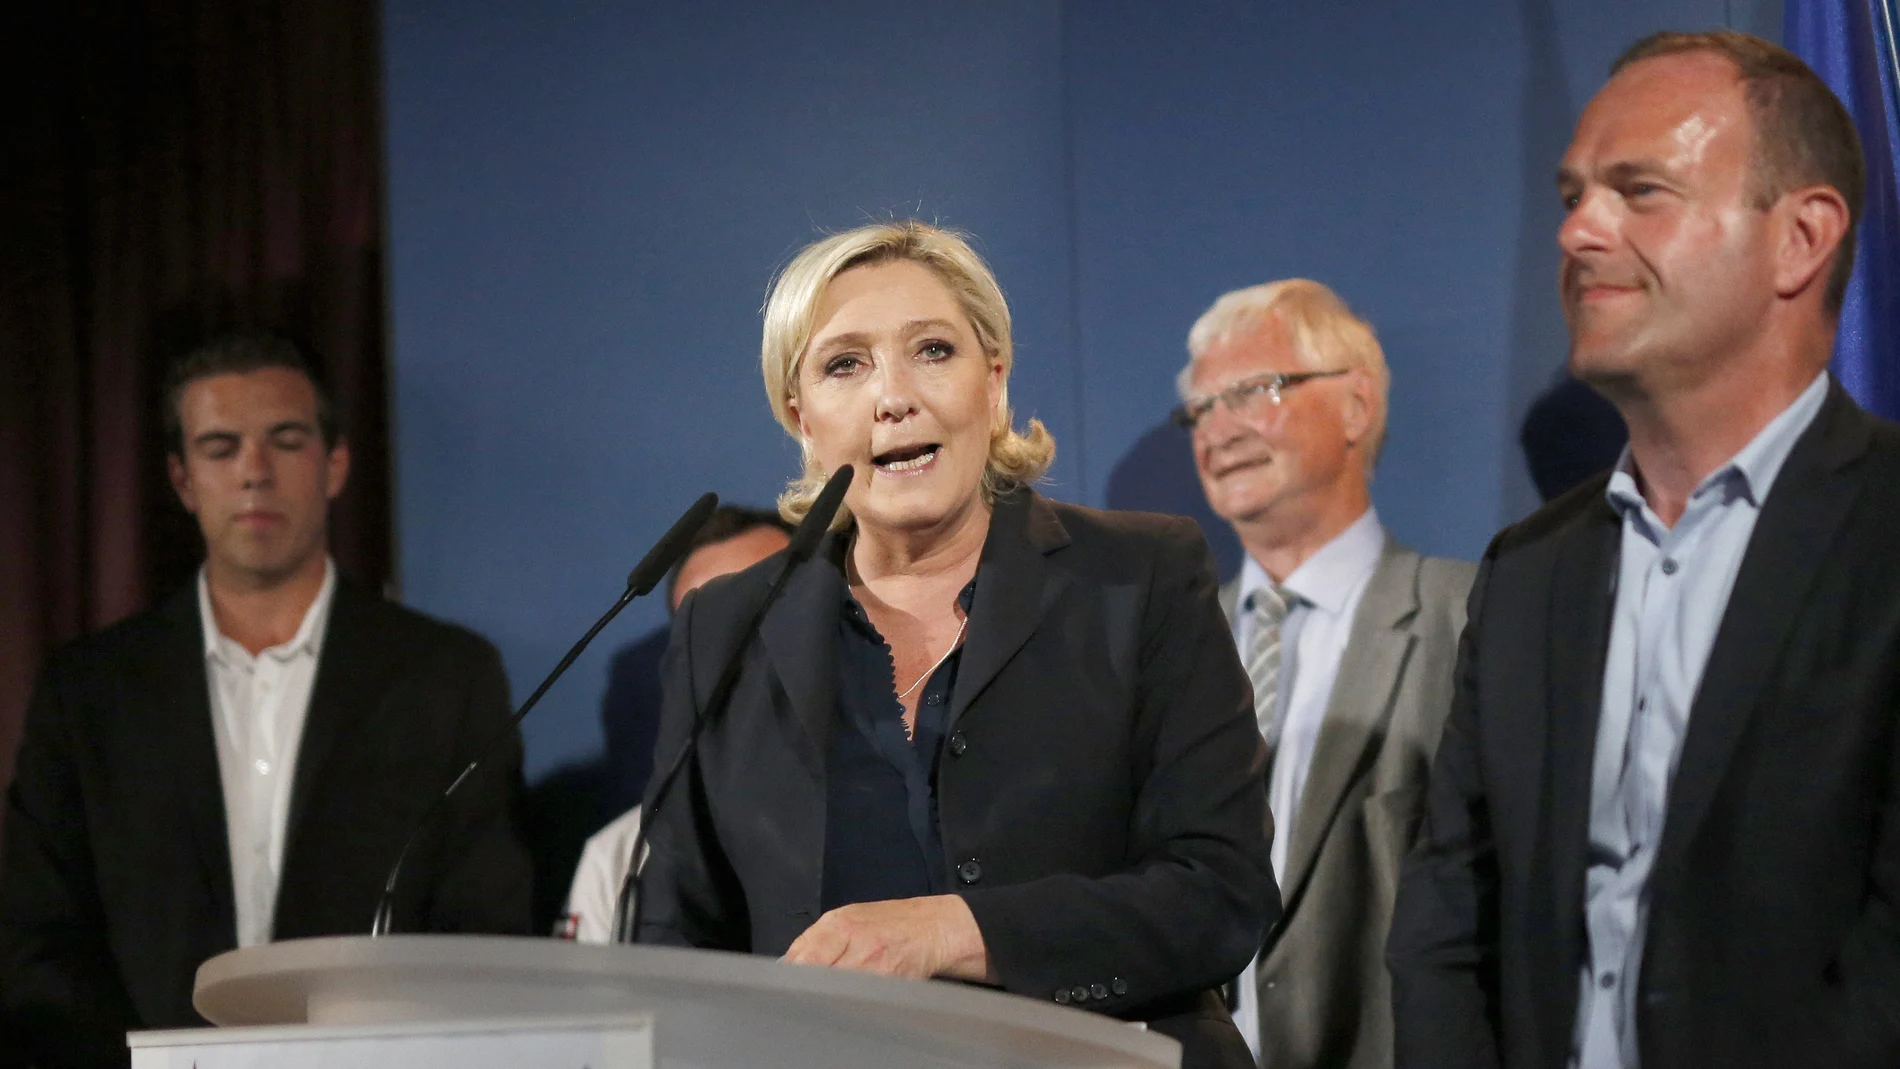 Marine Le Pen, líder de la ultraderecha francesa